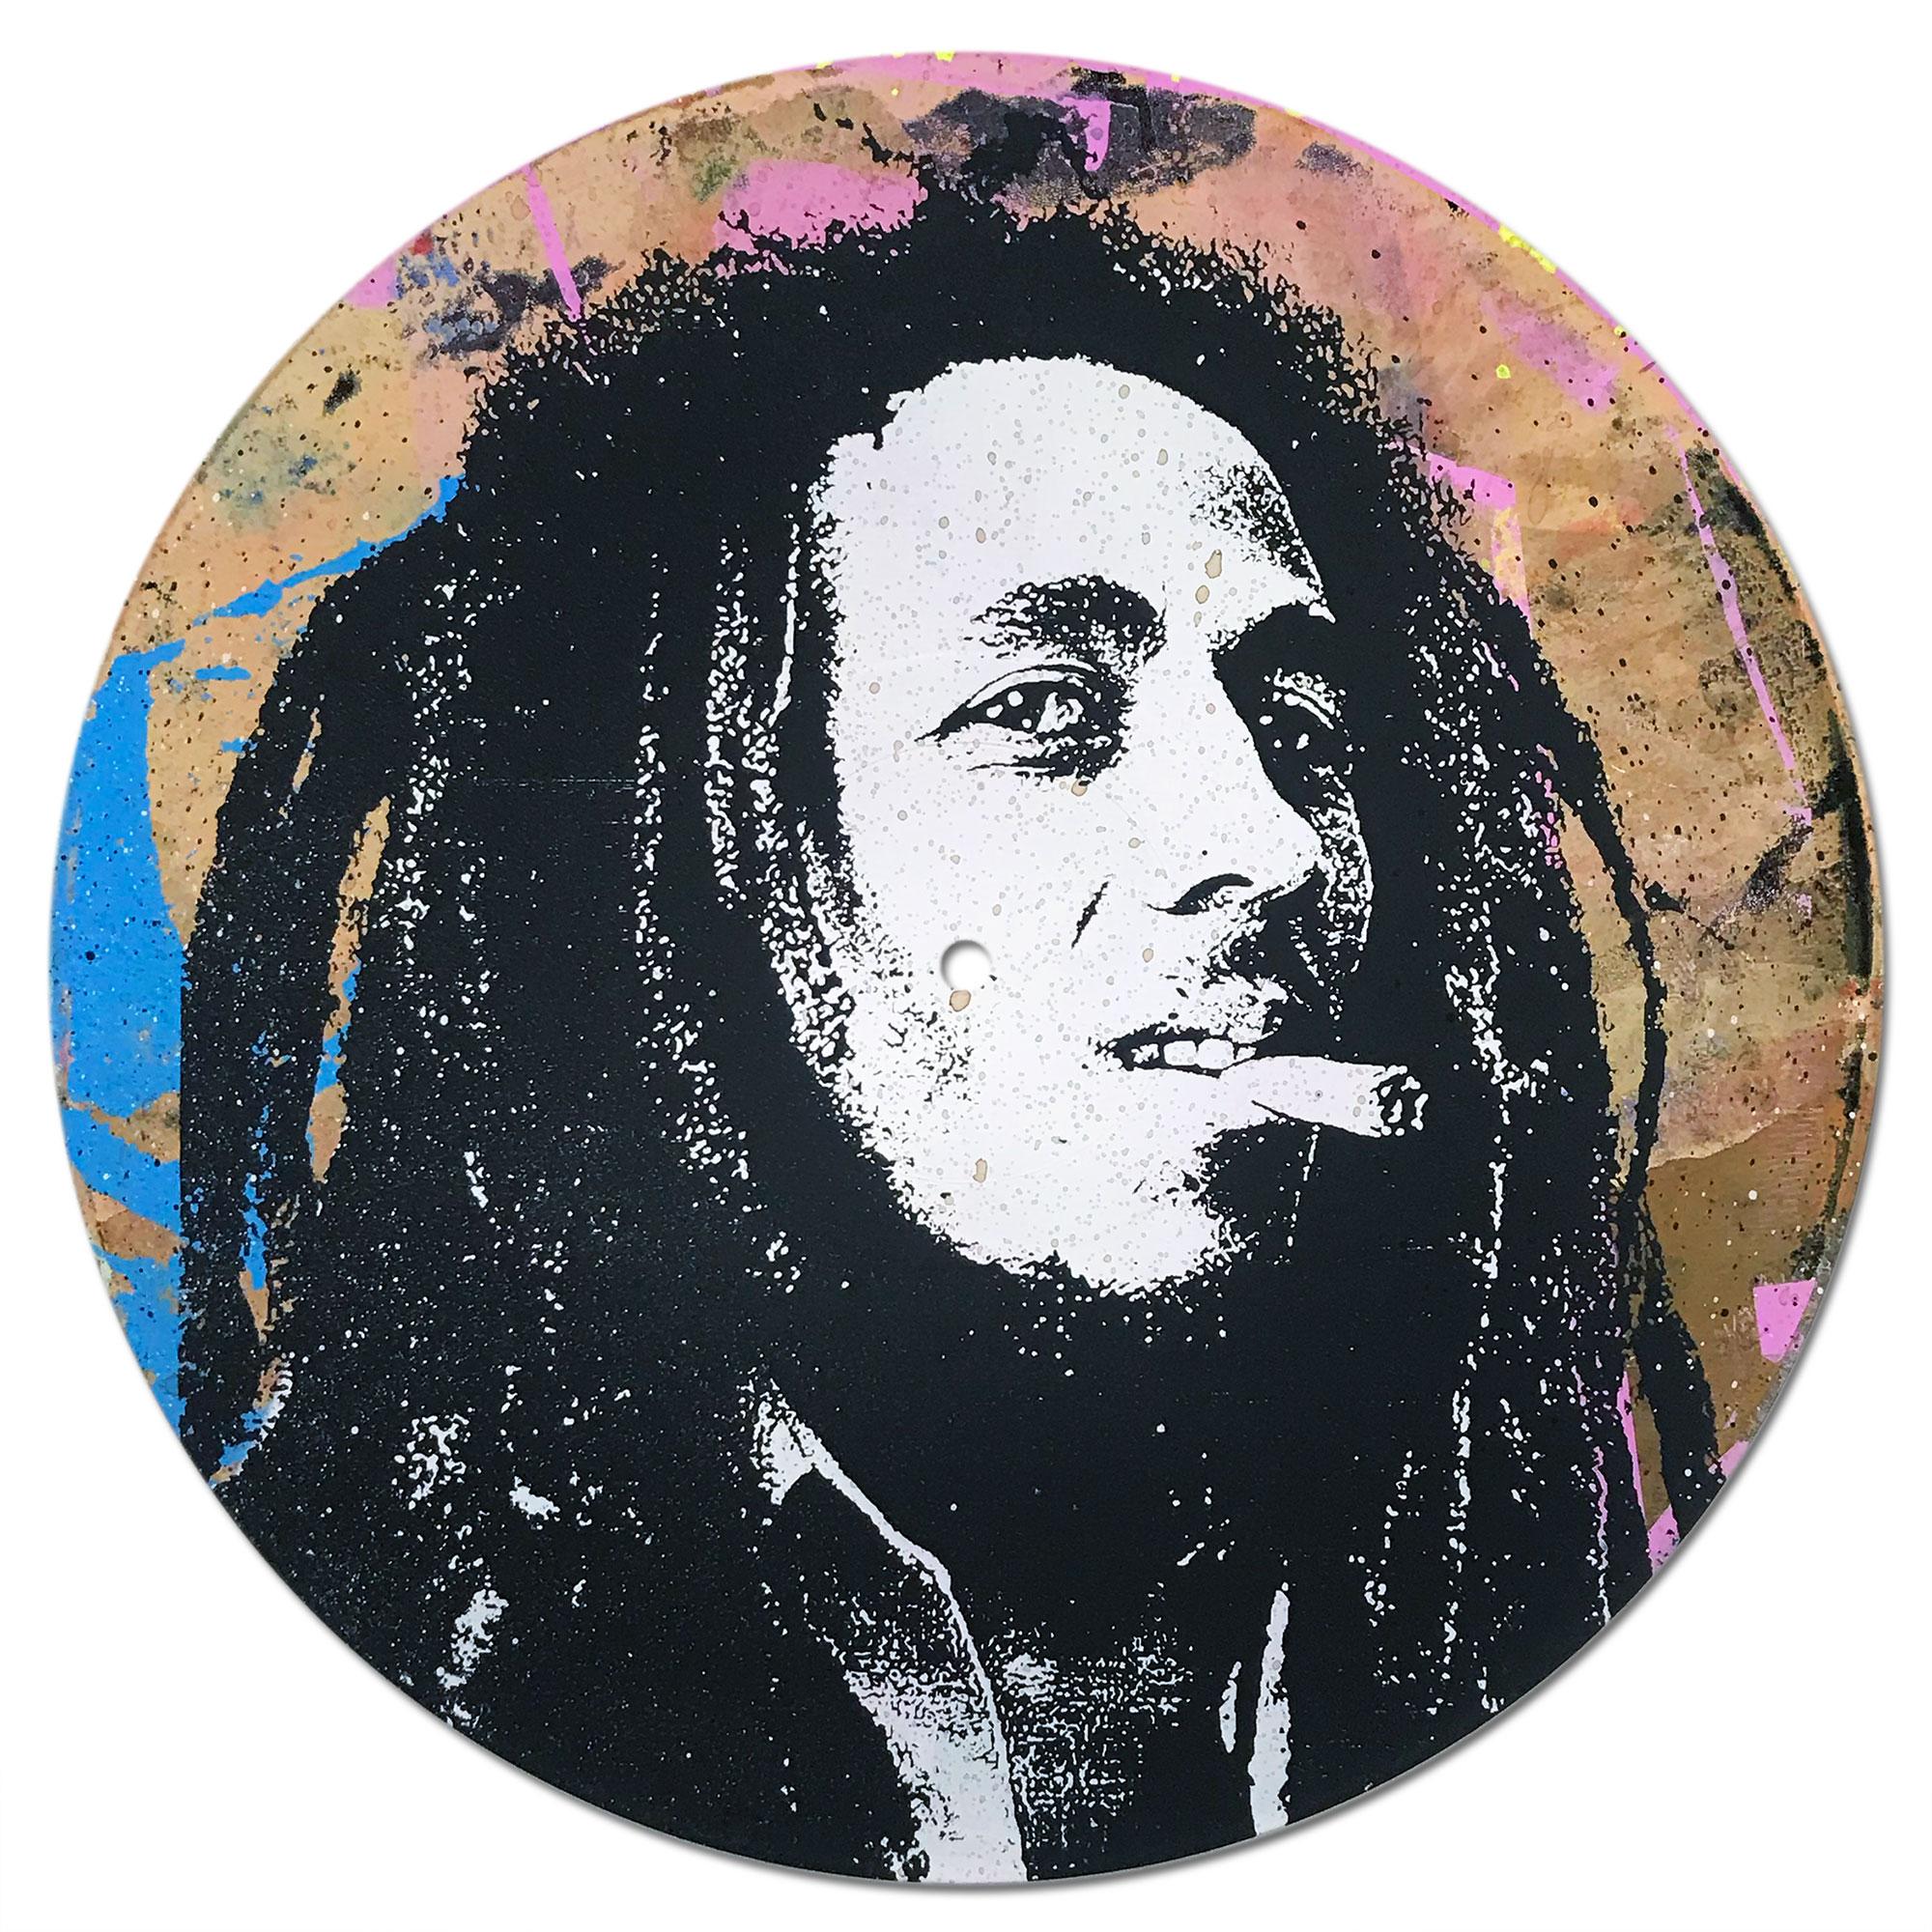 Bob Marley Vinyl 1-10, Greg Gossel Pop Art LP Record (Singles & Sets Available) For Sale 4